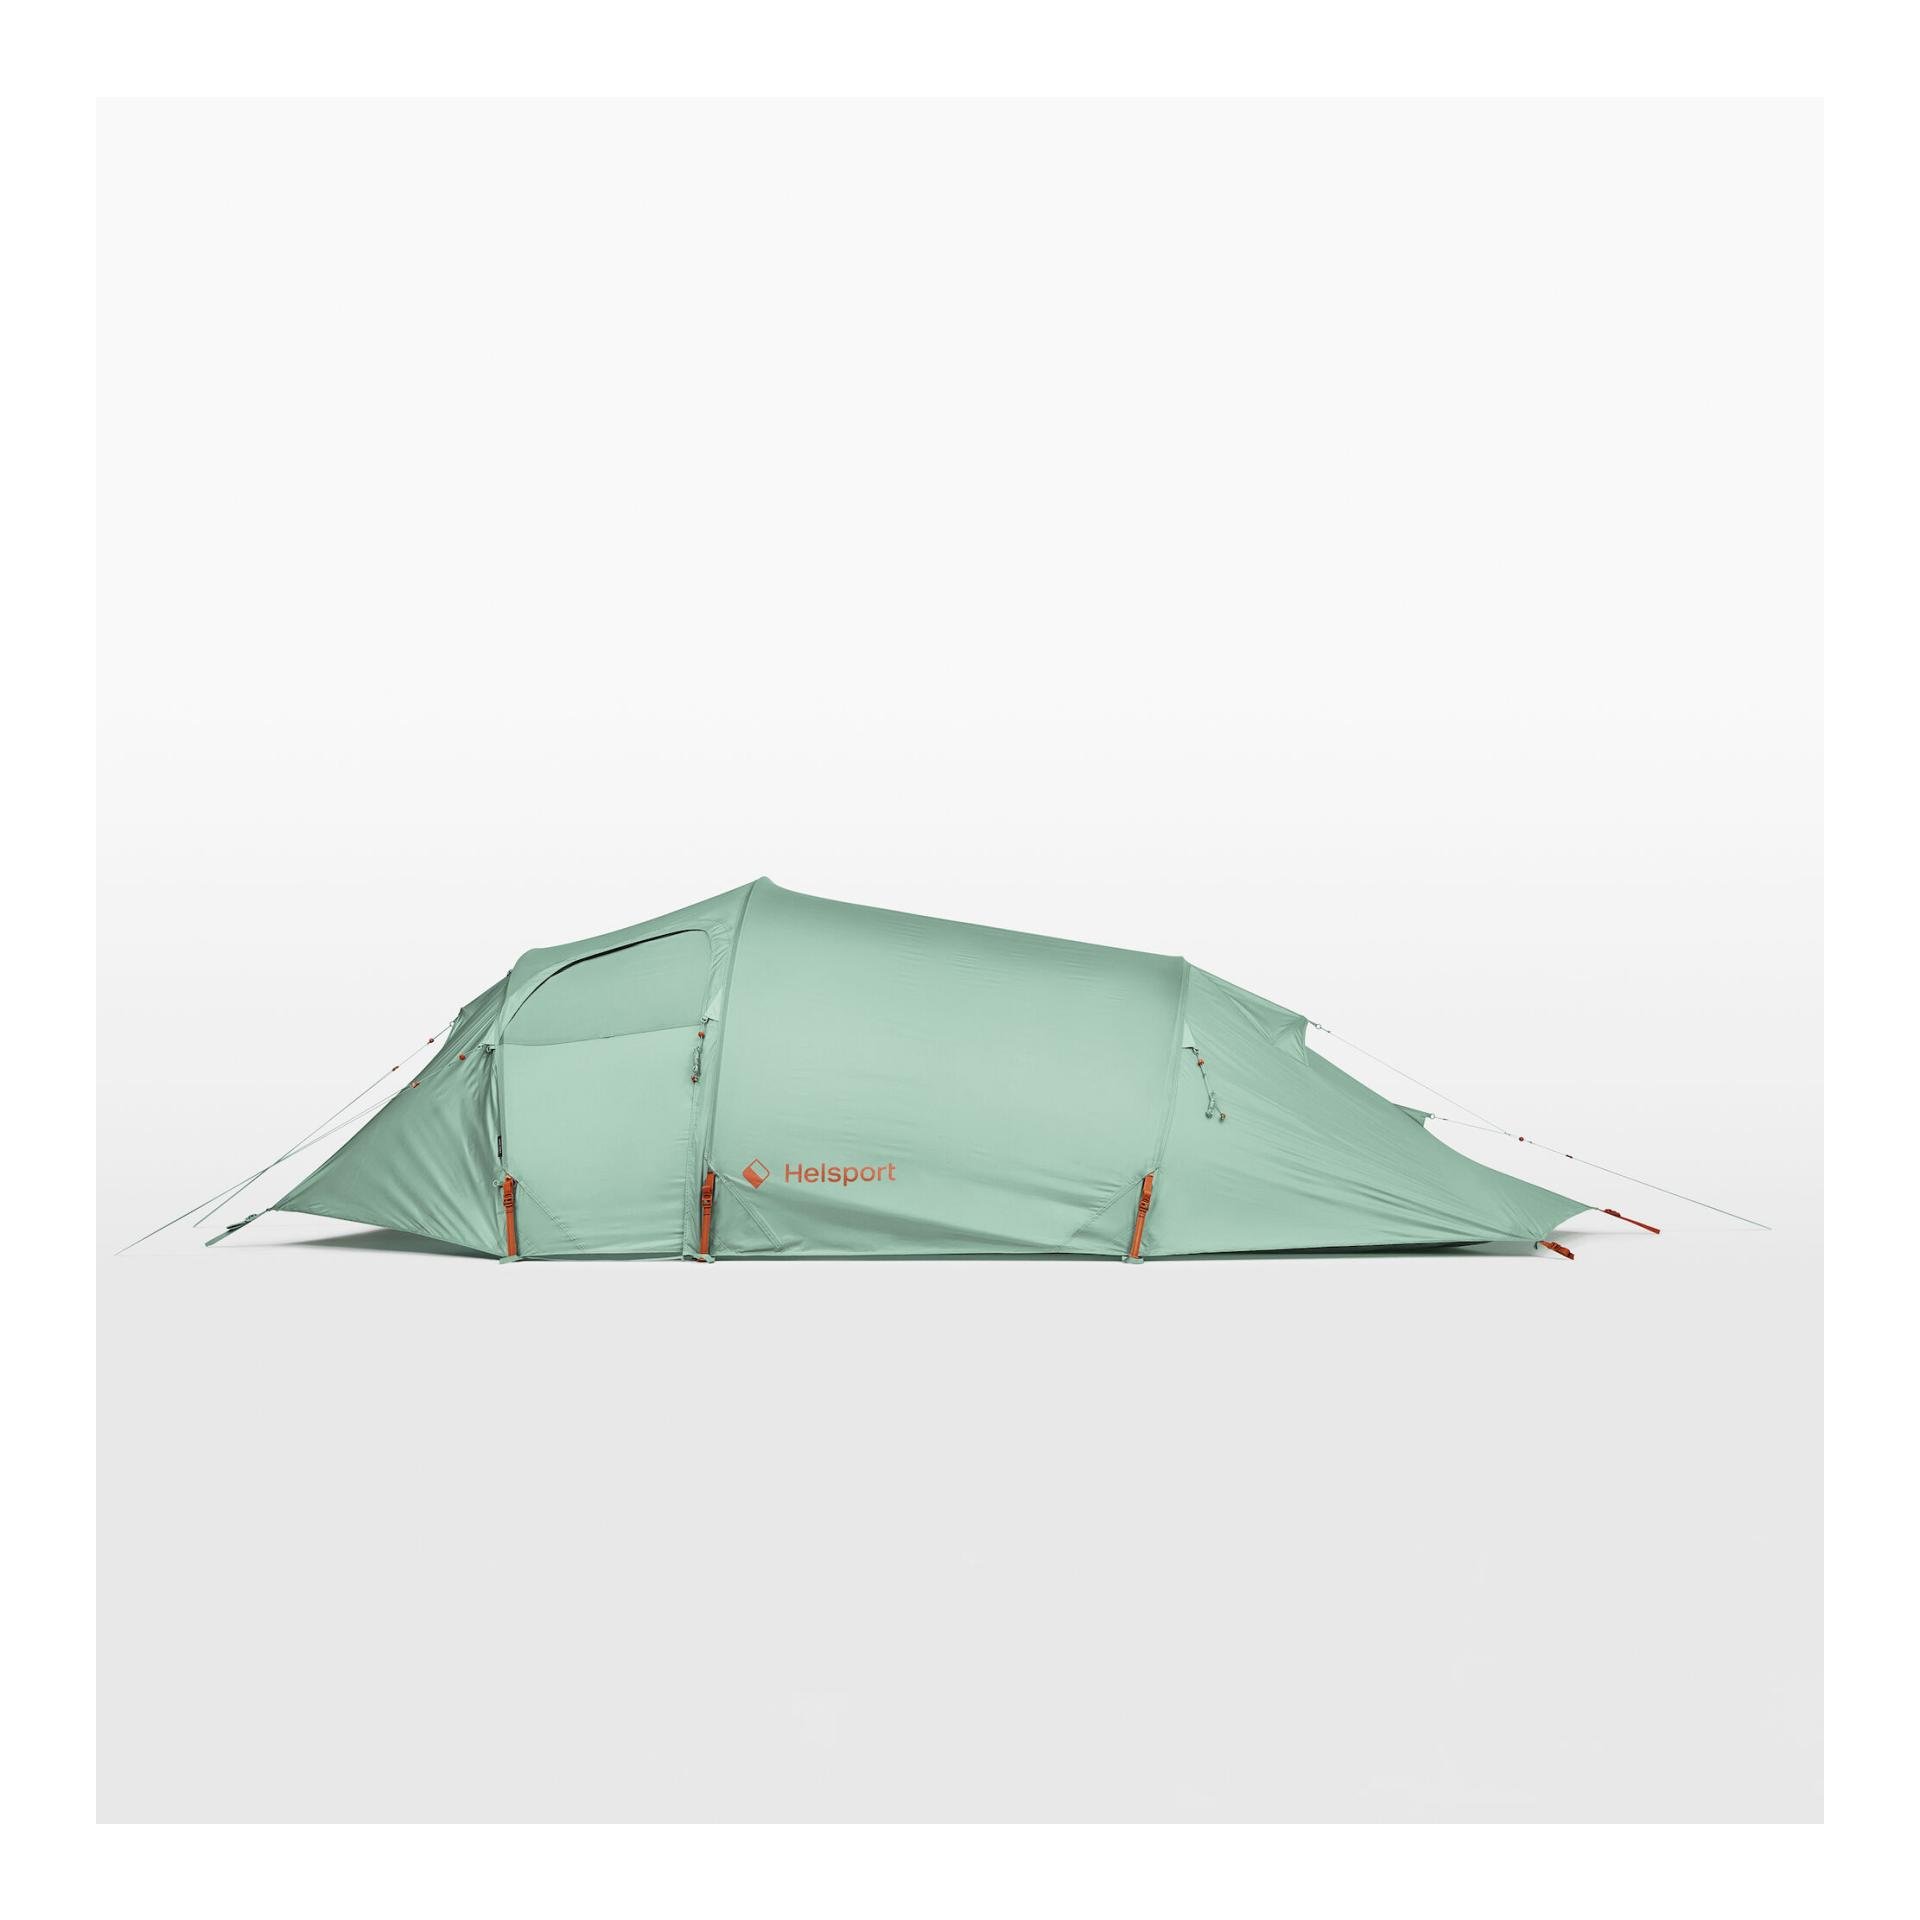 Helsport Scouter Lofoten 2 tent